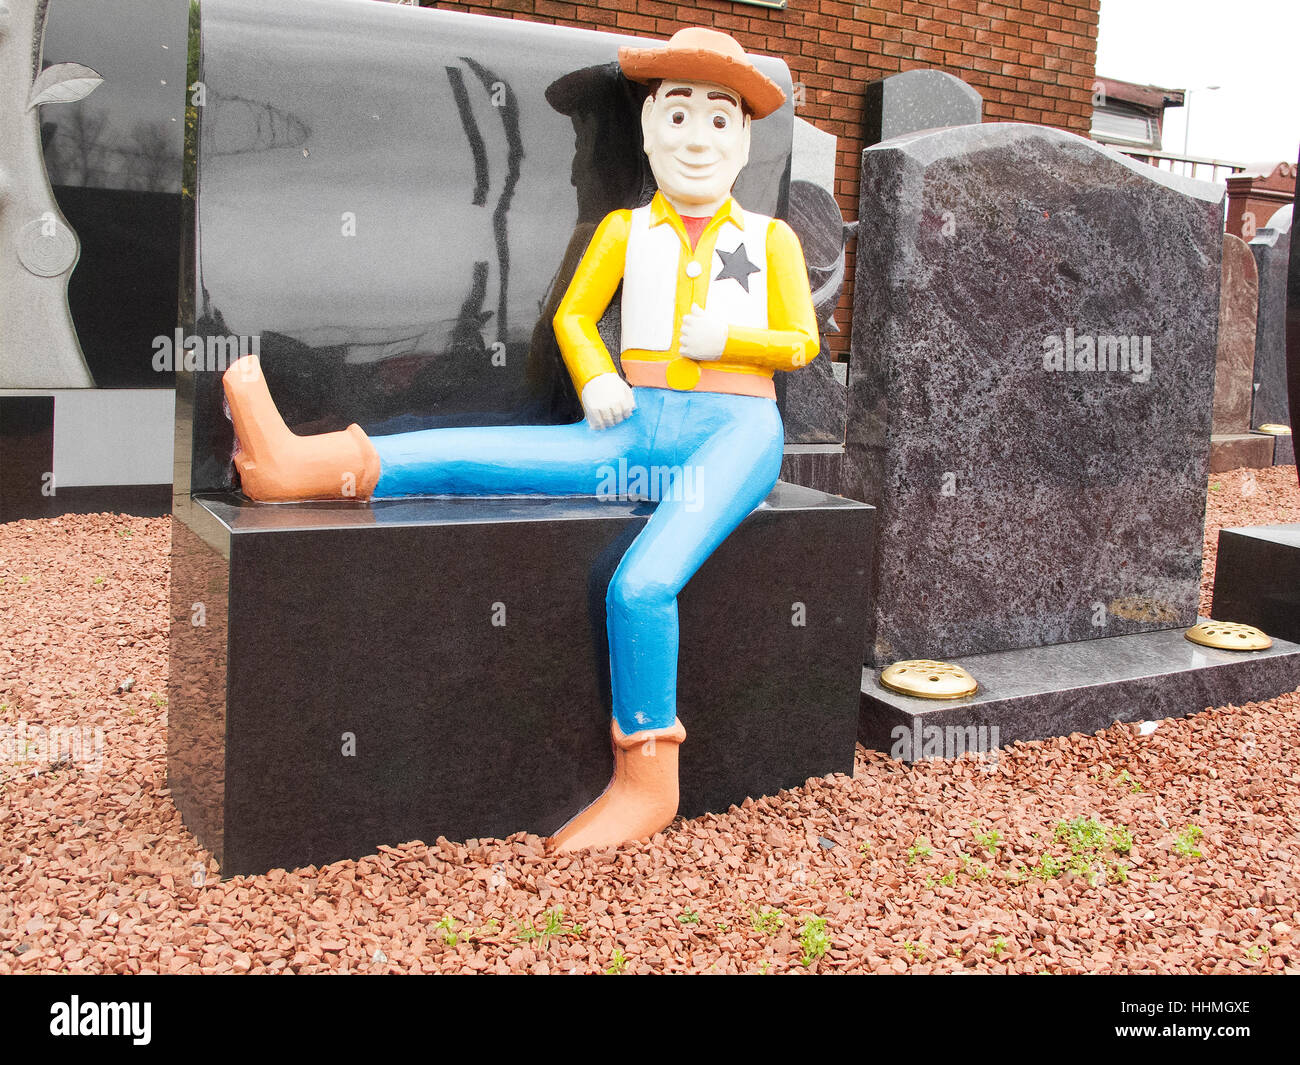 Cimitero lapide con woody di Toy Story. Foto Stock